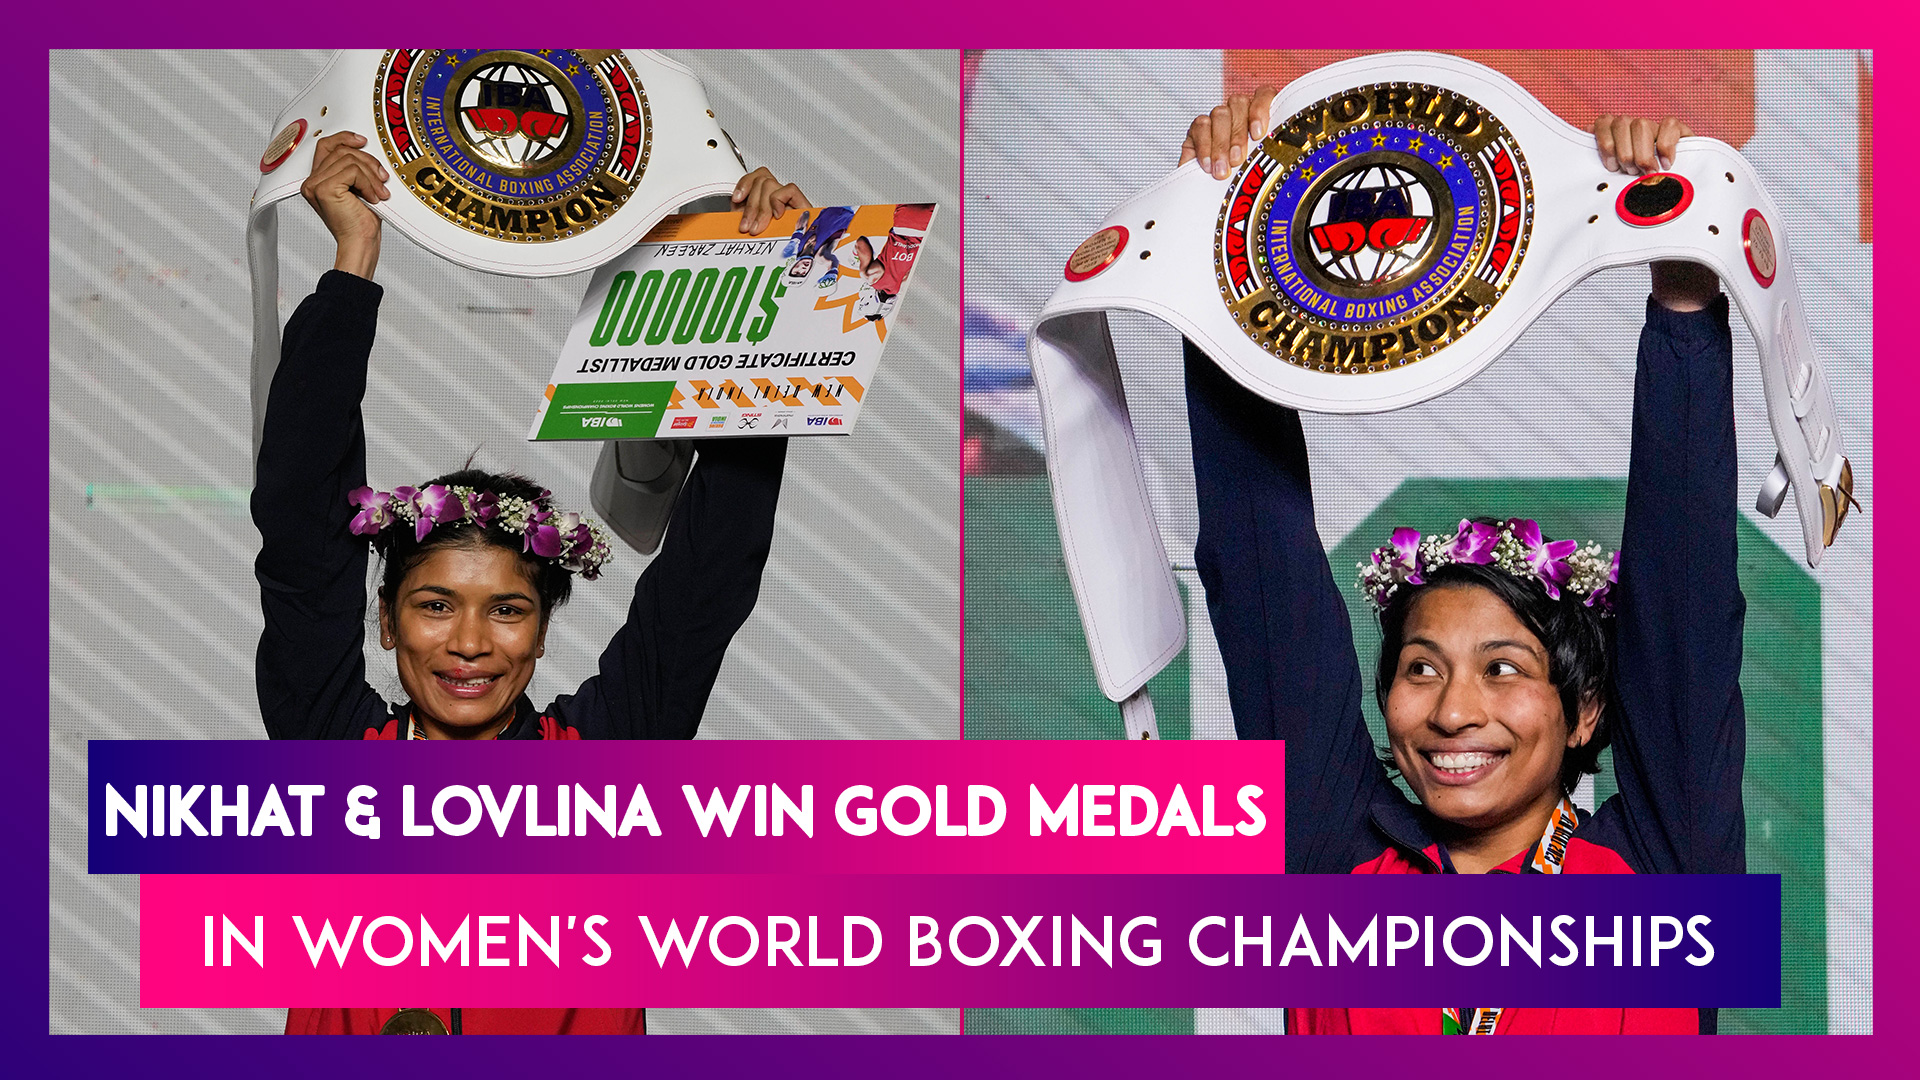 Women's World Boxing Championships: Nikhat Zareen & Lovlina Borgohain Win Gold Medals